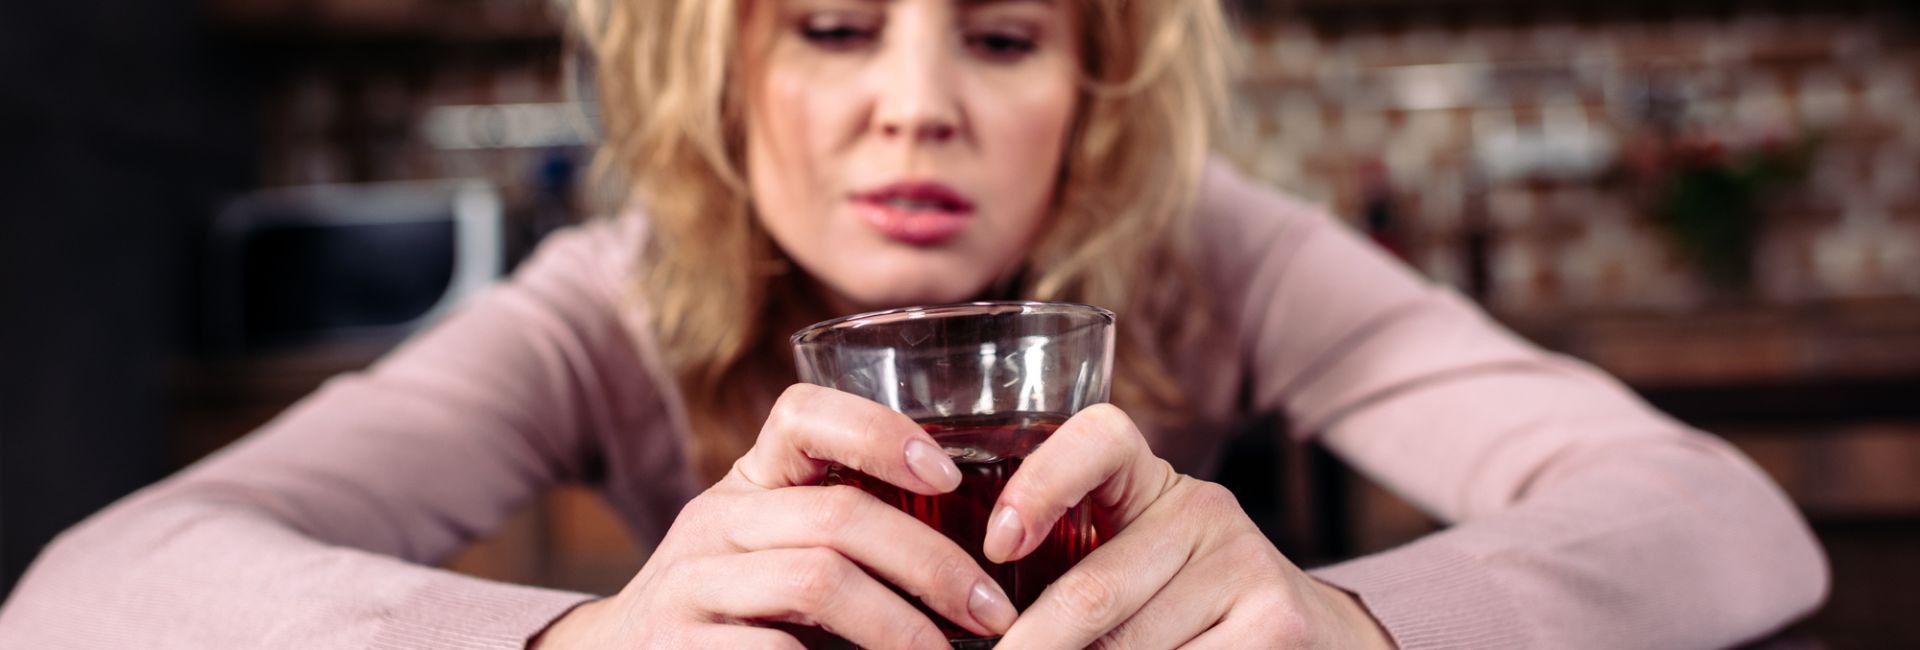 Tratamento alcoólico feminino